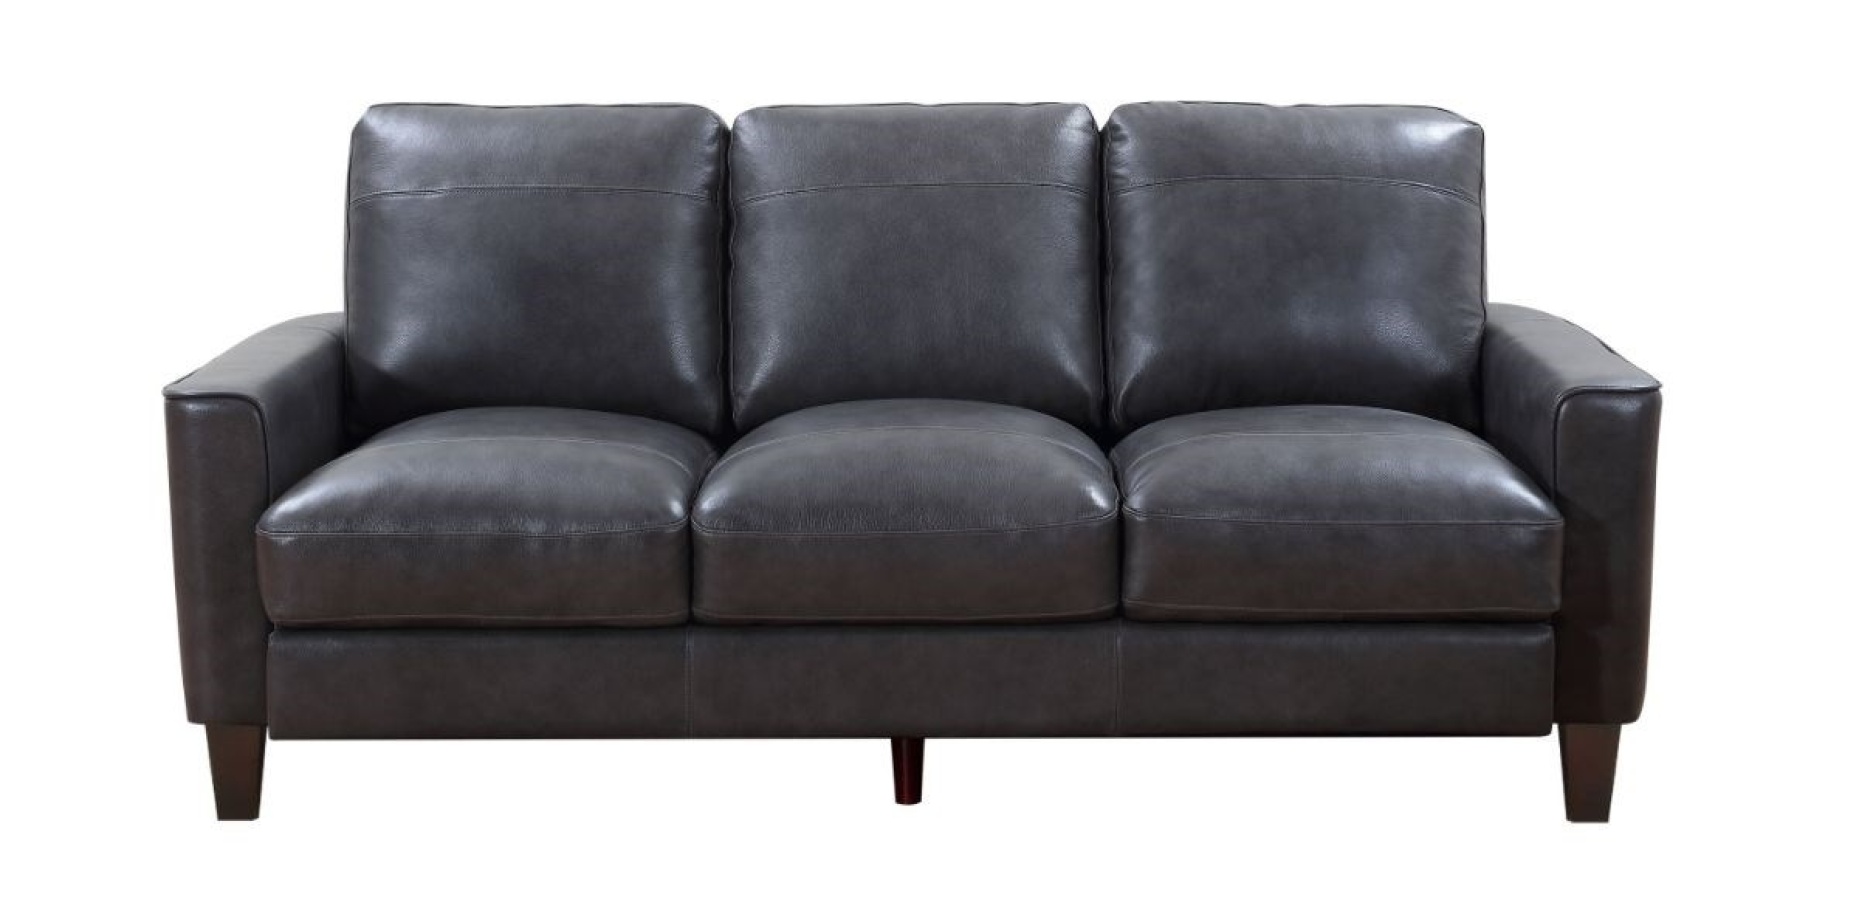 Chino Leather Sofa